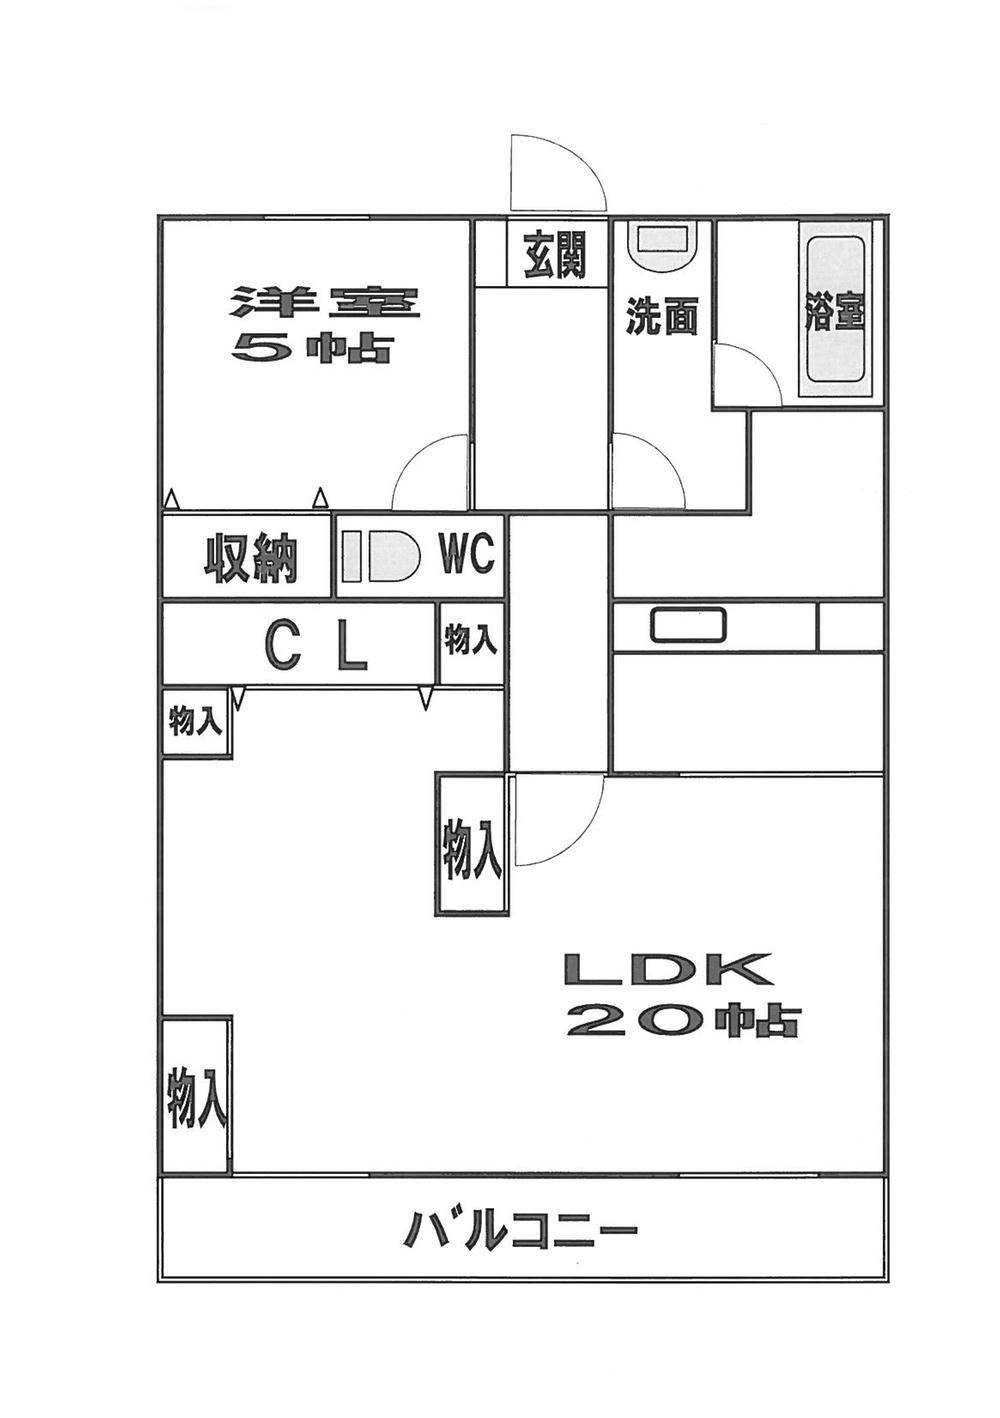 Floor plan. 1LDK, Price 8.2 million yen, Footprint 65.6 sq m